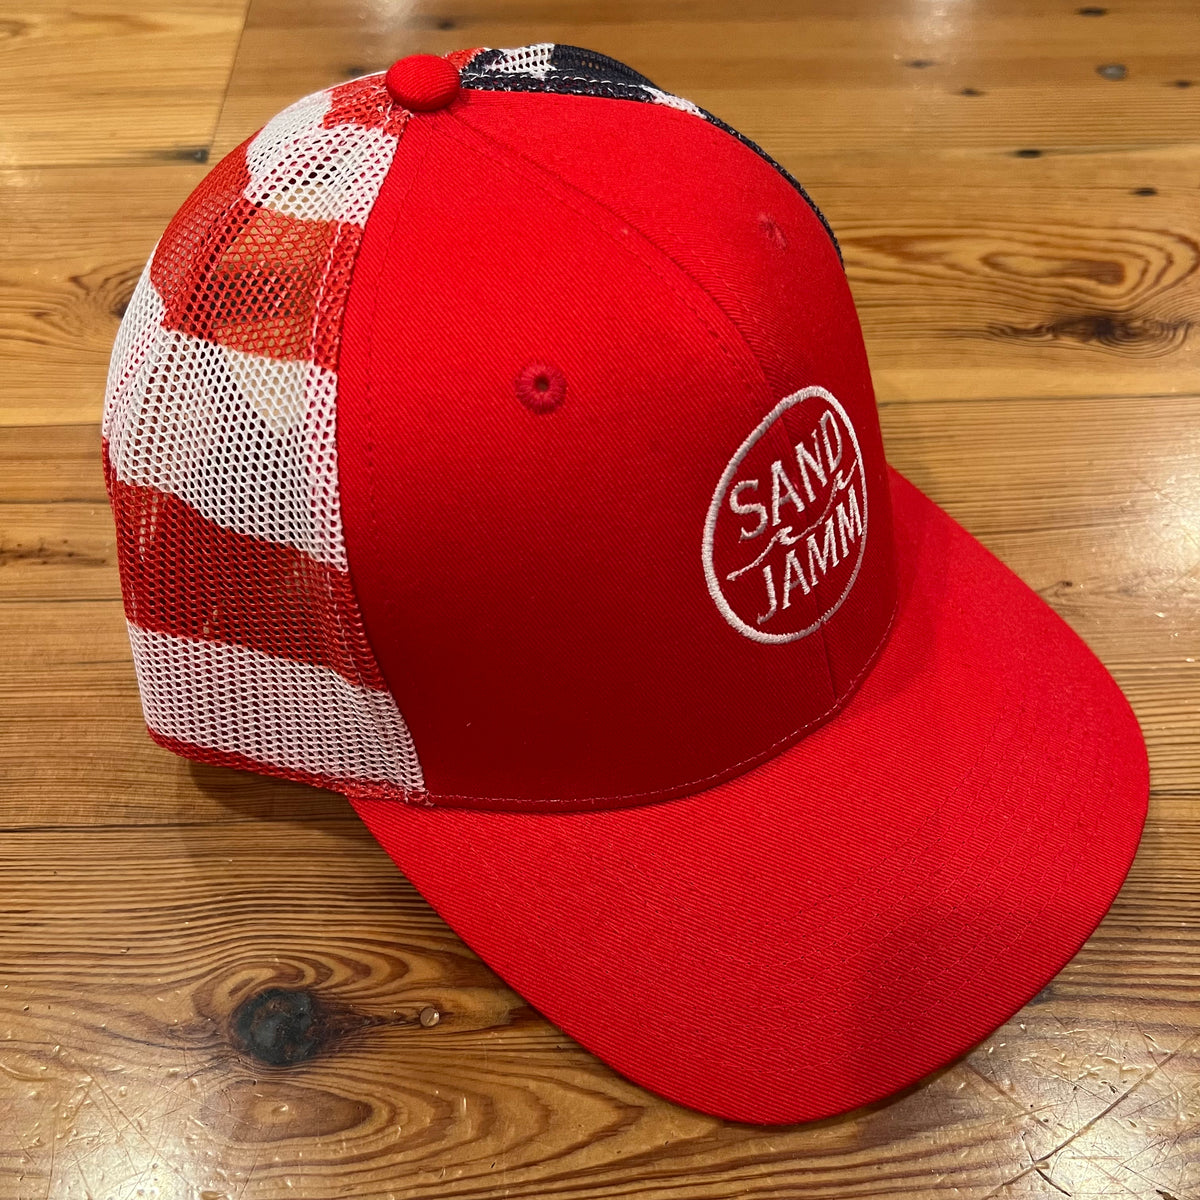 Classic Trucker Hat - Red/USA – Sand Jamm